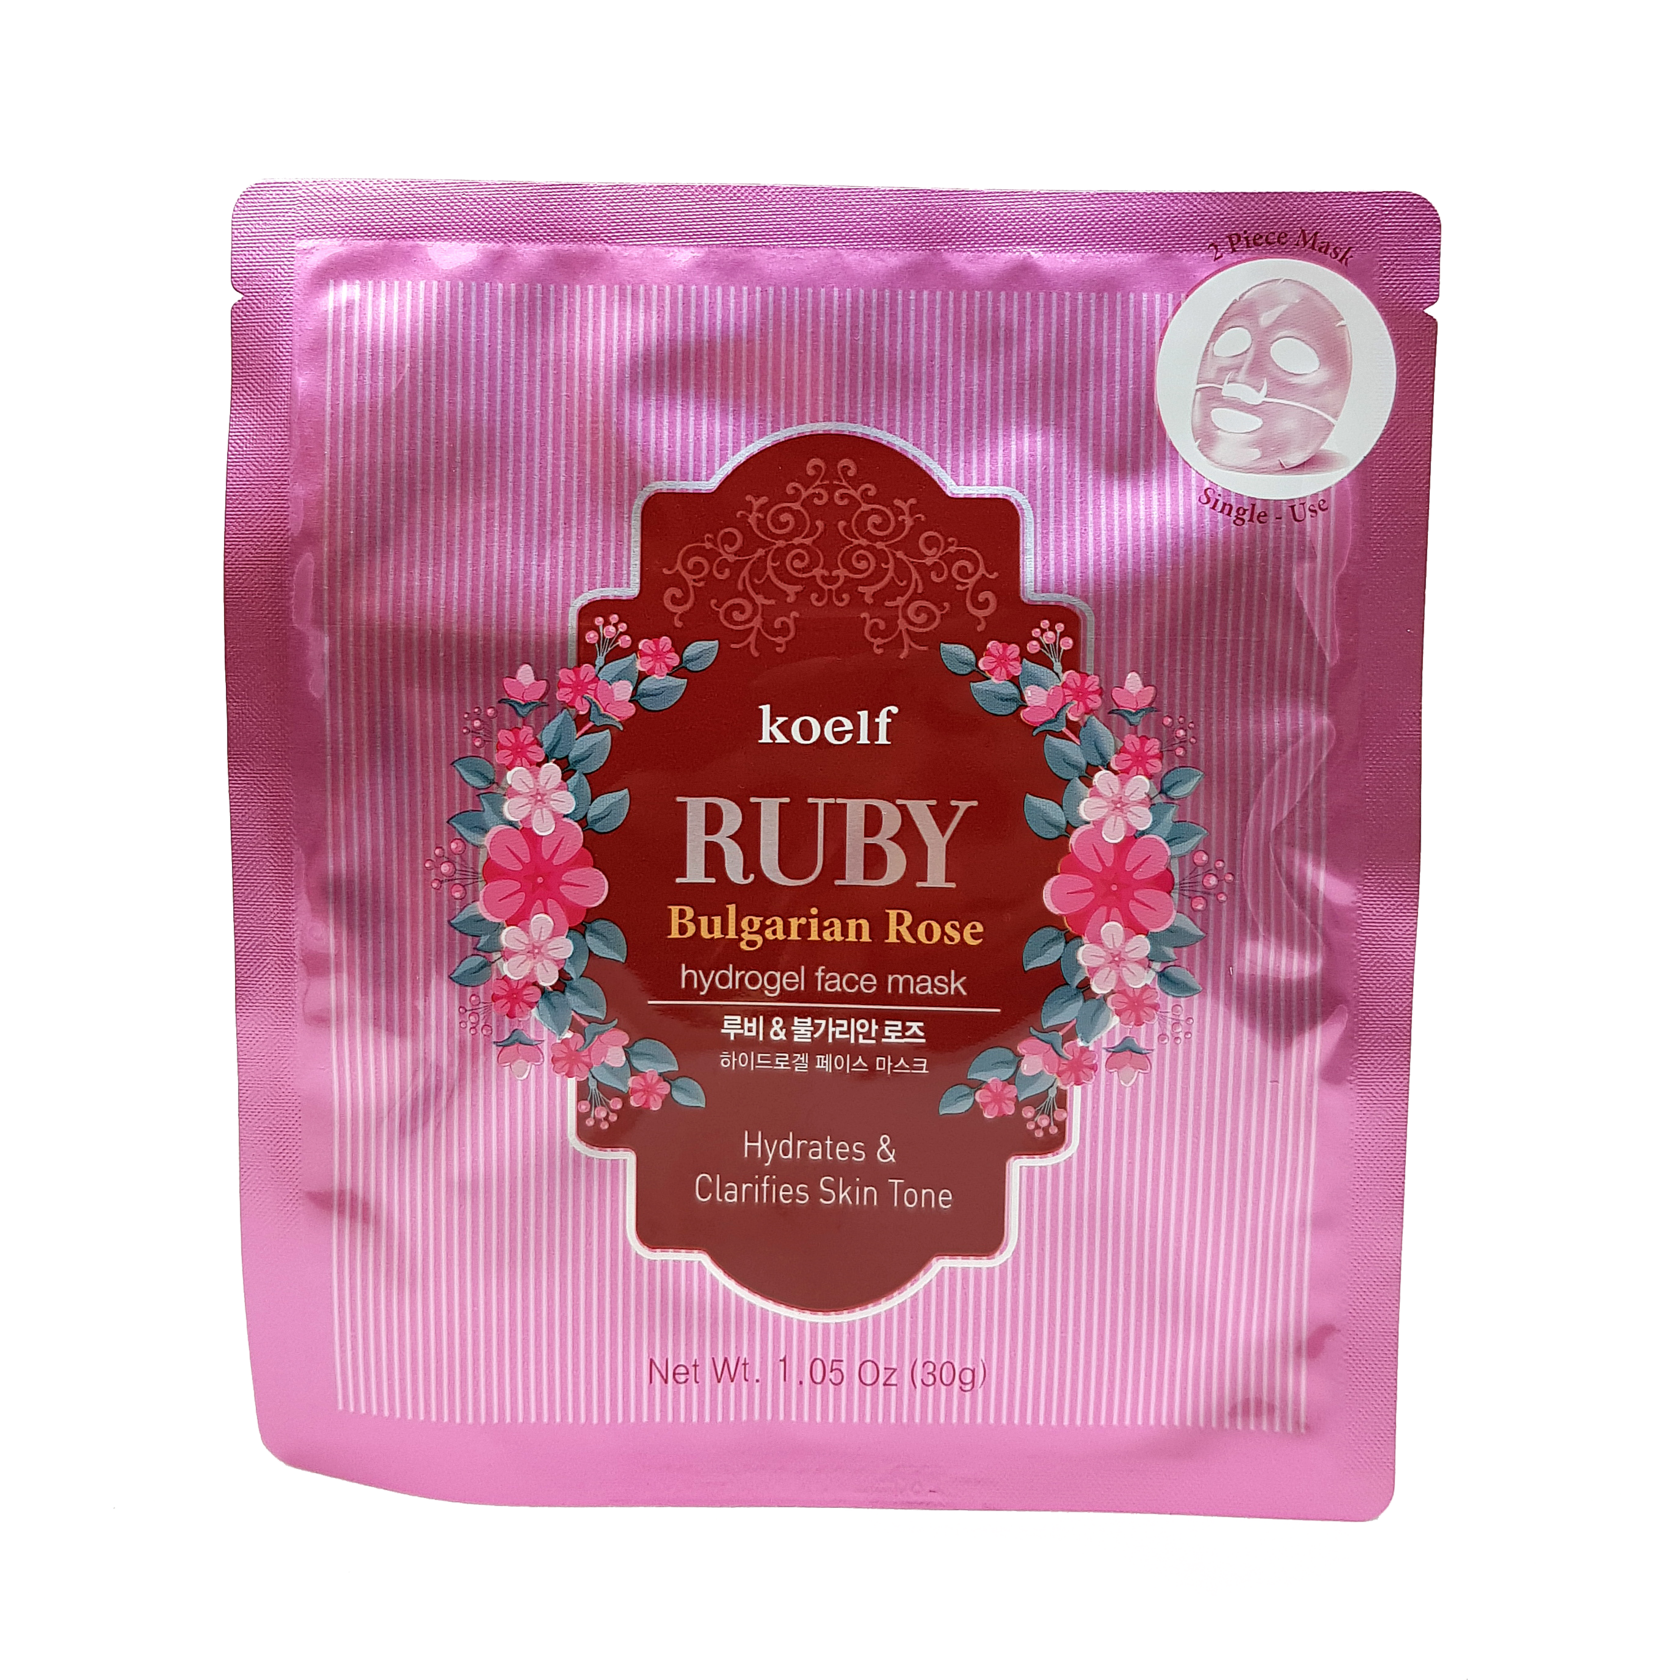 KOELF Ruby & Bulgarian Rose Hydrogel Face Mask